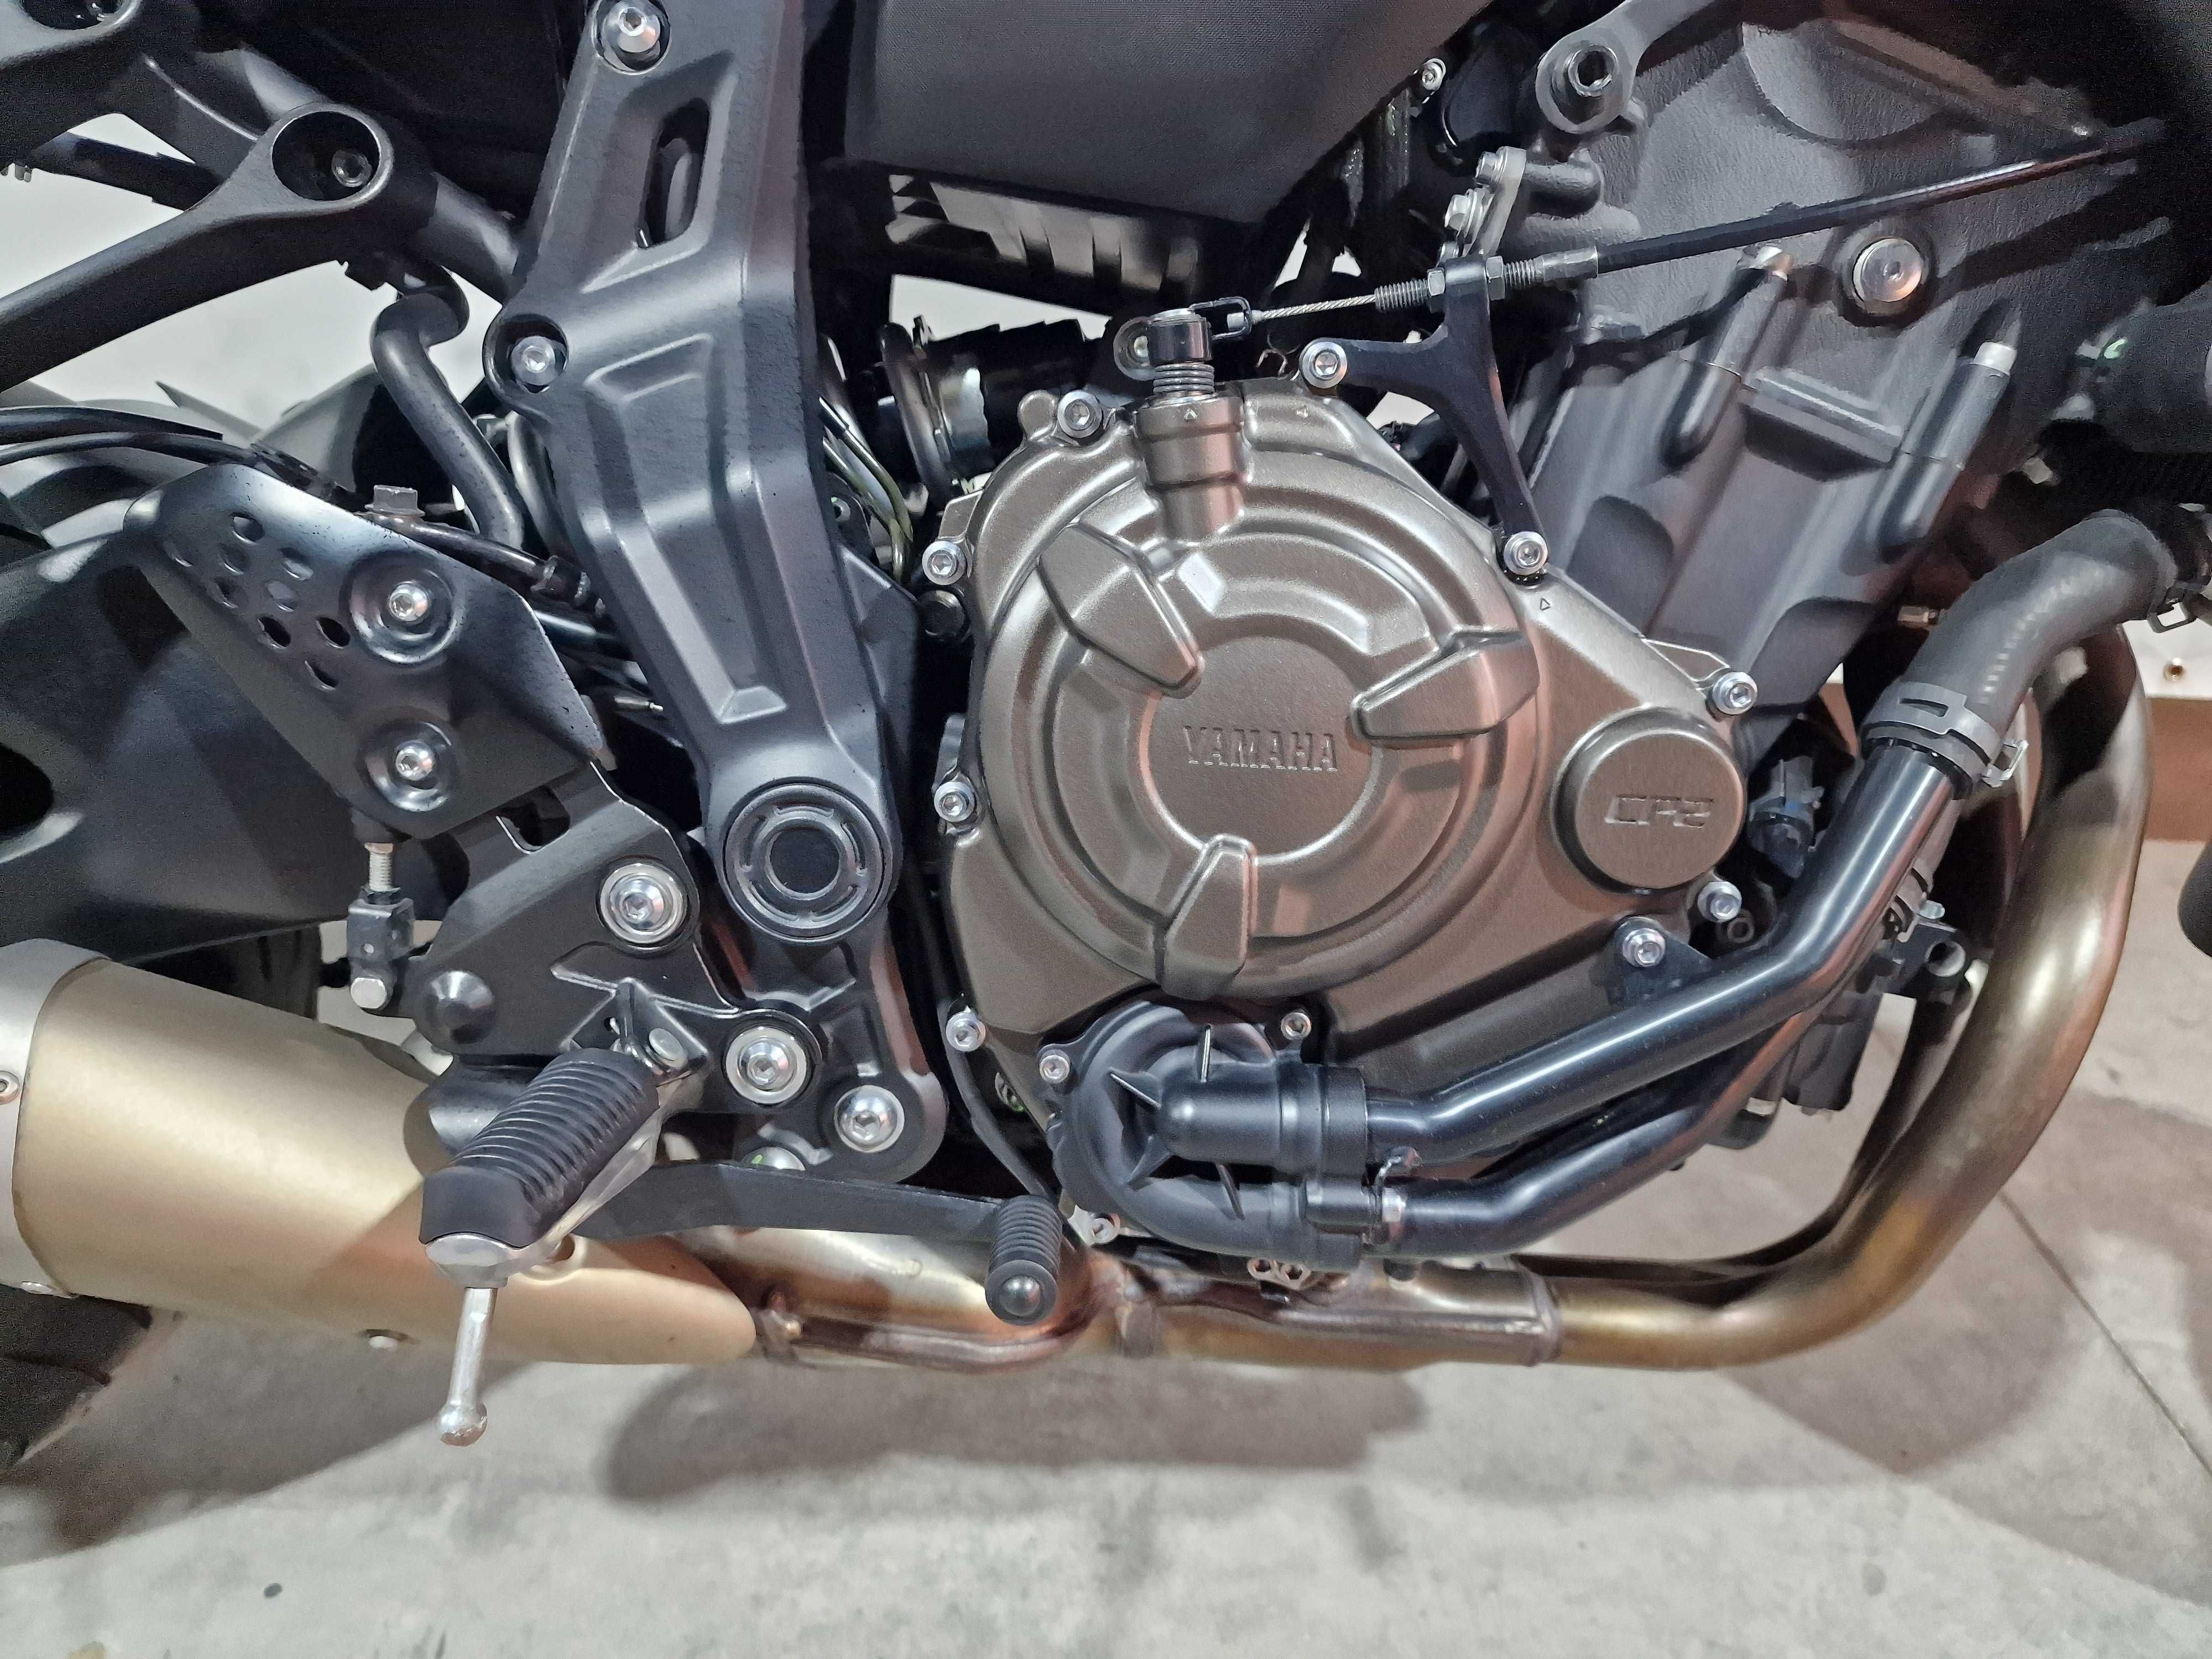 MotoMus vinde Motocicleta Yamaha Tracer 700 ABS 700cc 74CP - Y02593